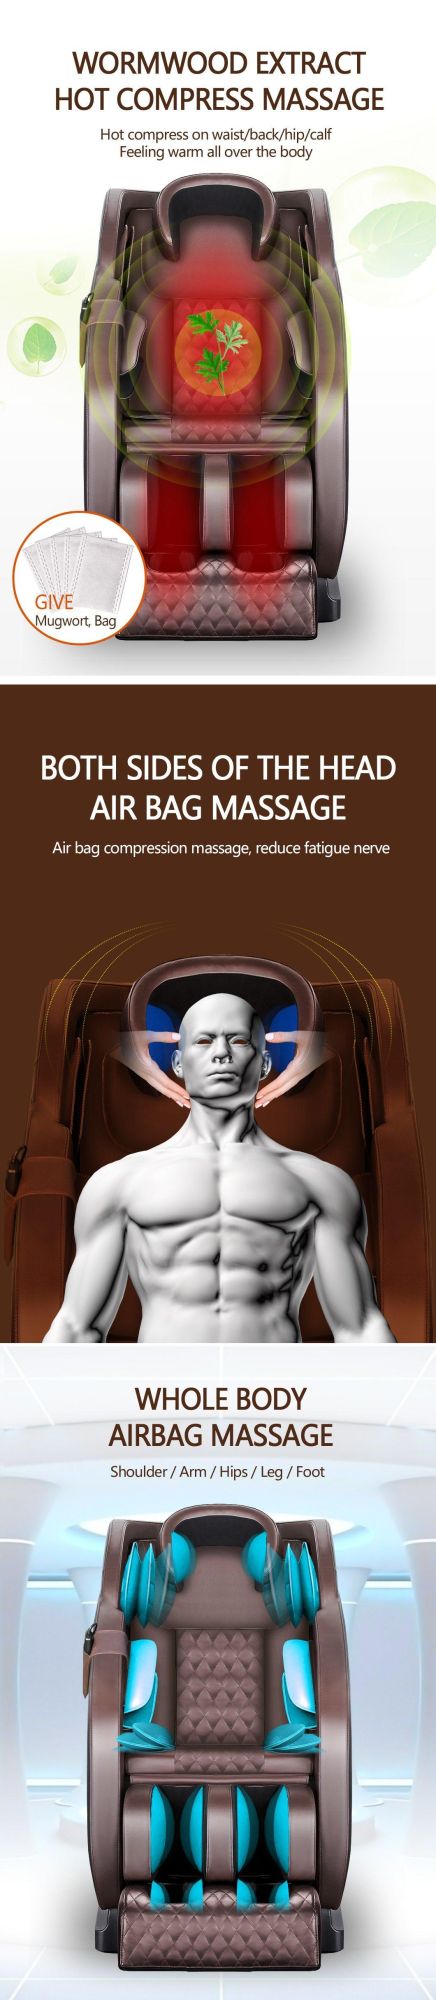 Commercial Massage Equipment Full Body Shiatsu Massage Chair with Zero Gravity